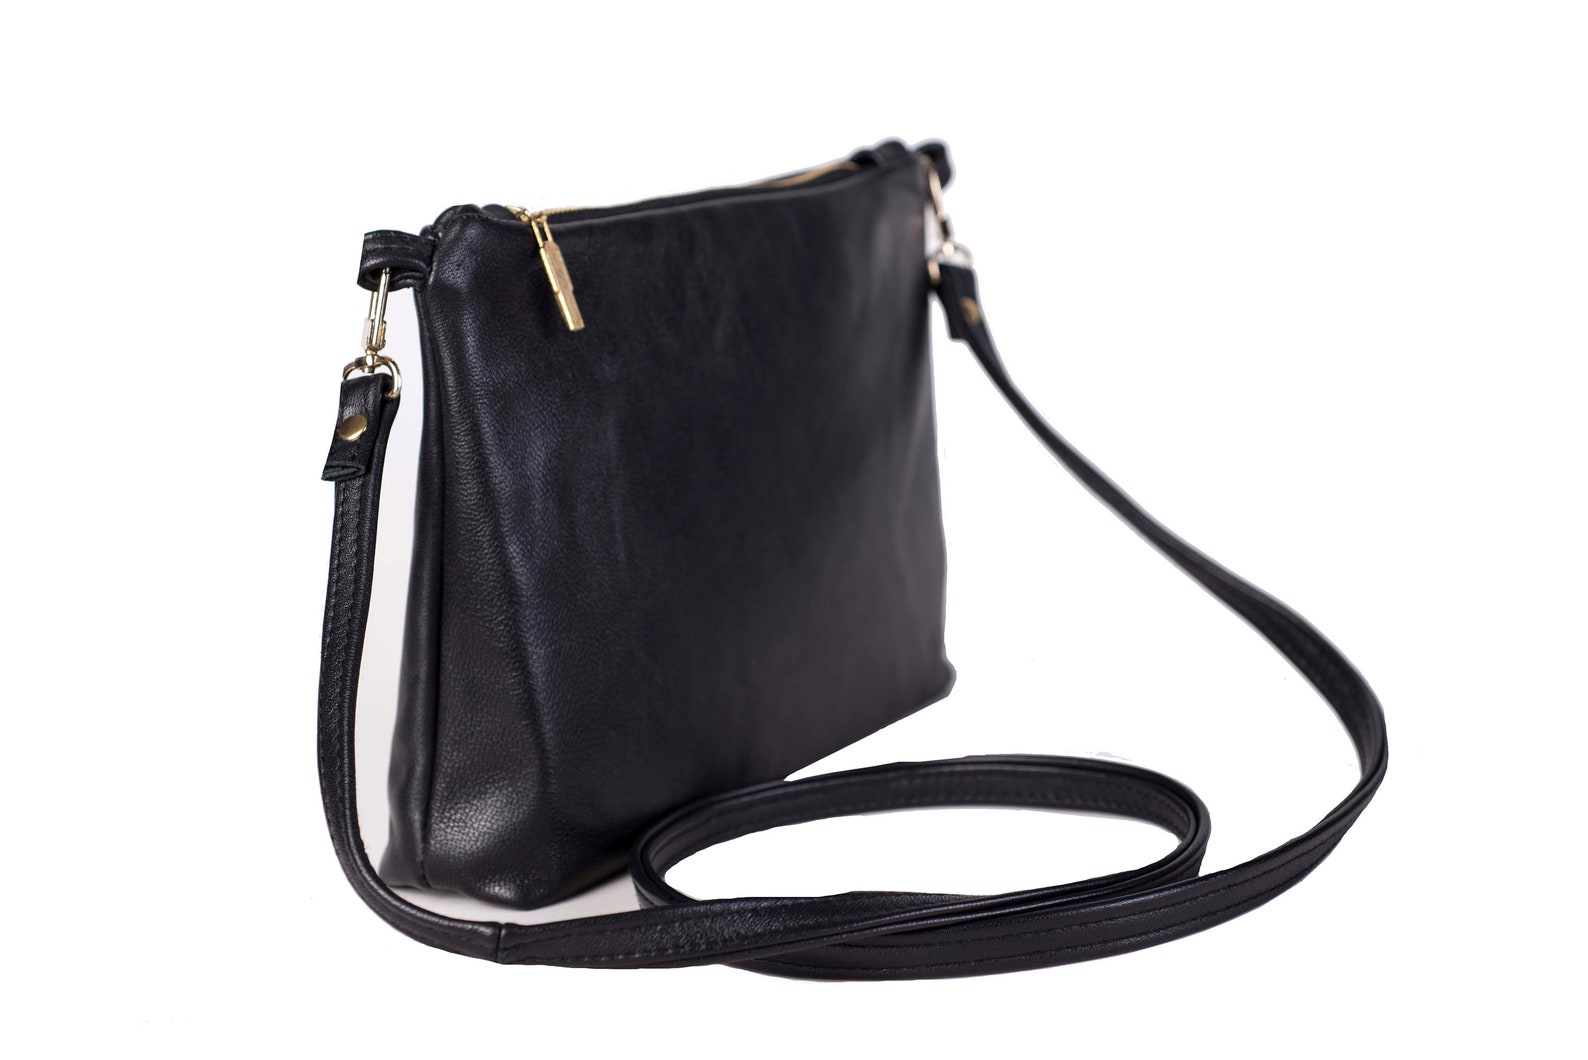 Minimalist Cross body leather bag in black purse bag | Etsy